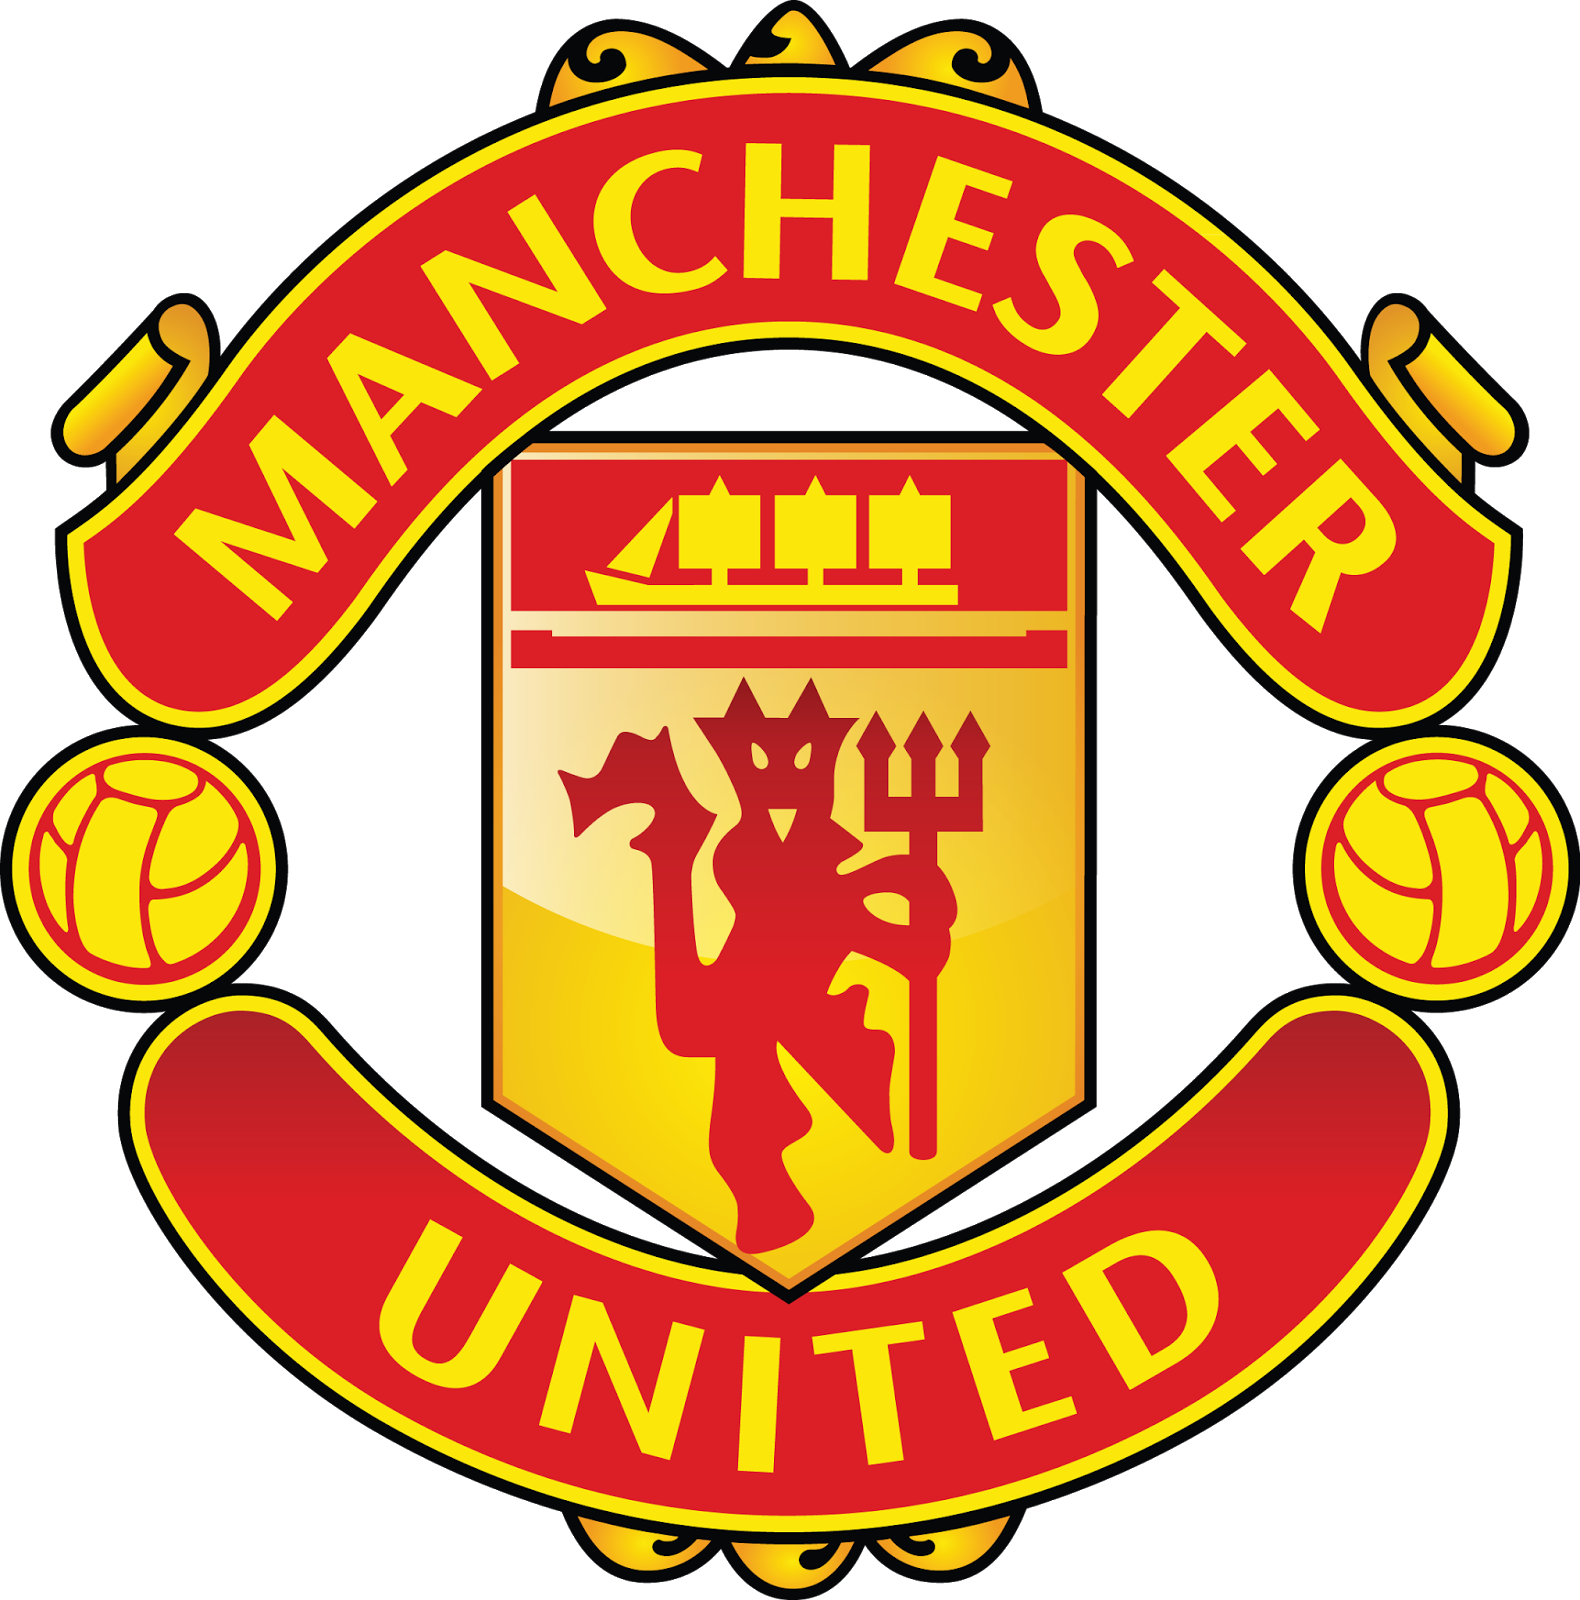 manchester united fc logo